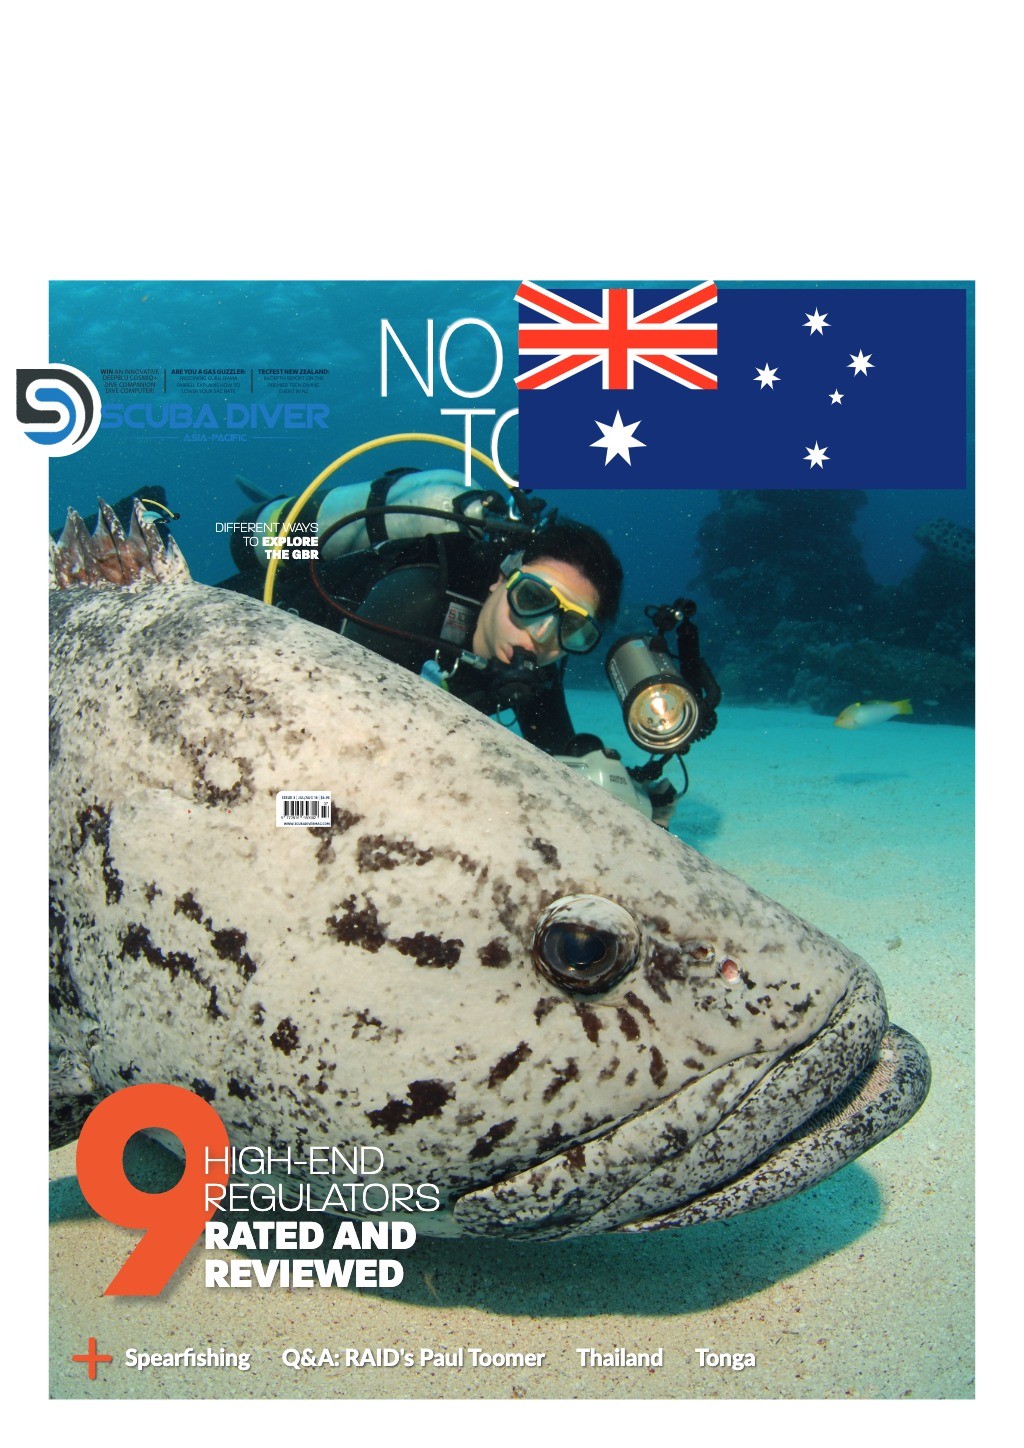 Scuba Diver Asia Pacific July 18 - Issue 3